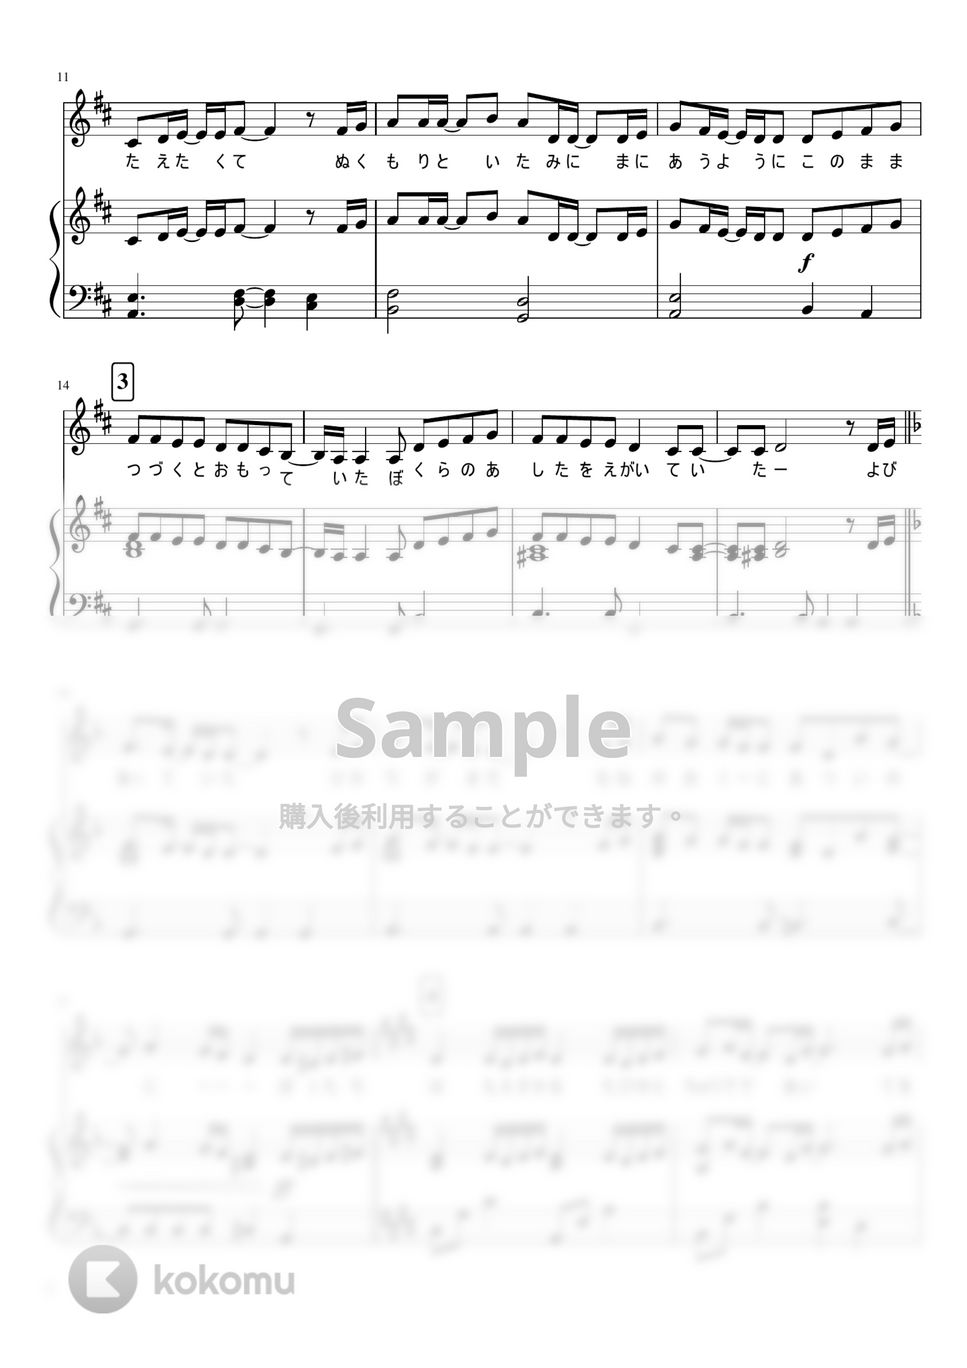 LiSA - 炎 (保育用 / ピアノ弾き歌い楽譜 3種＋メロディ譜 / 『鬼滅の刃 無限列車編』) by soup-majo